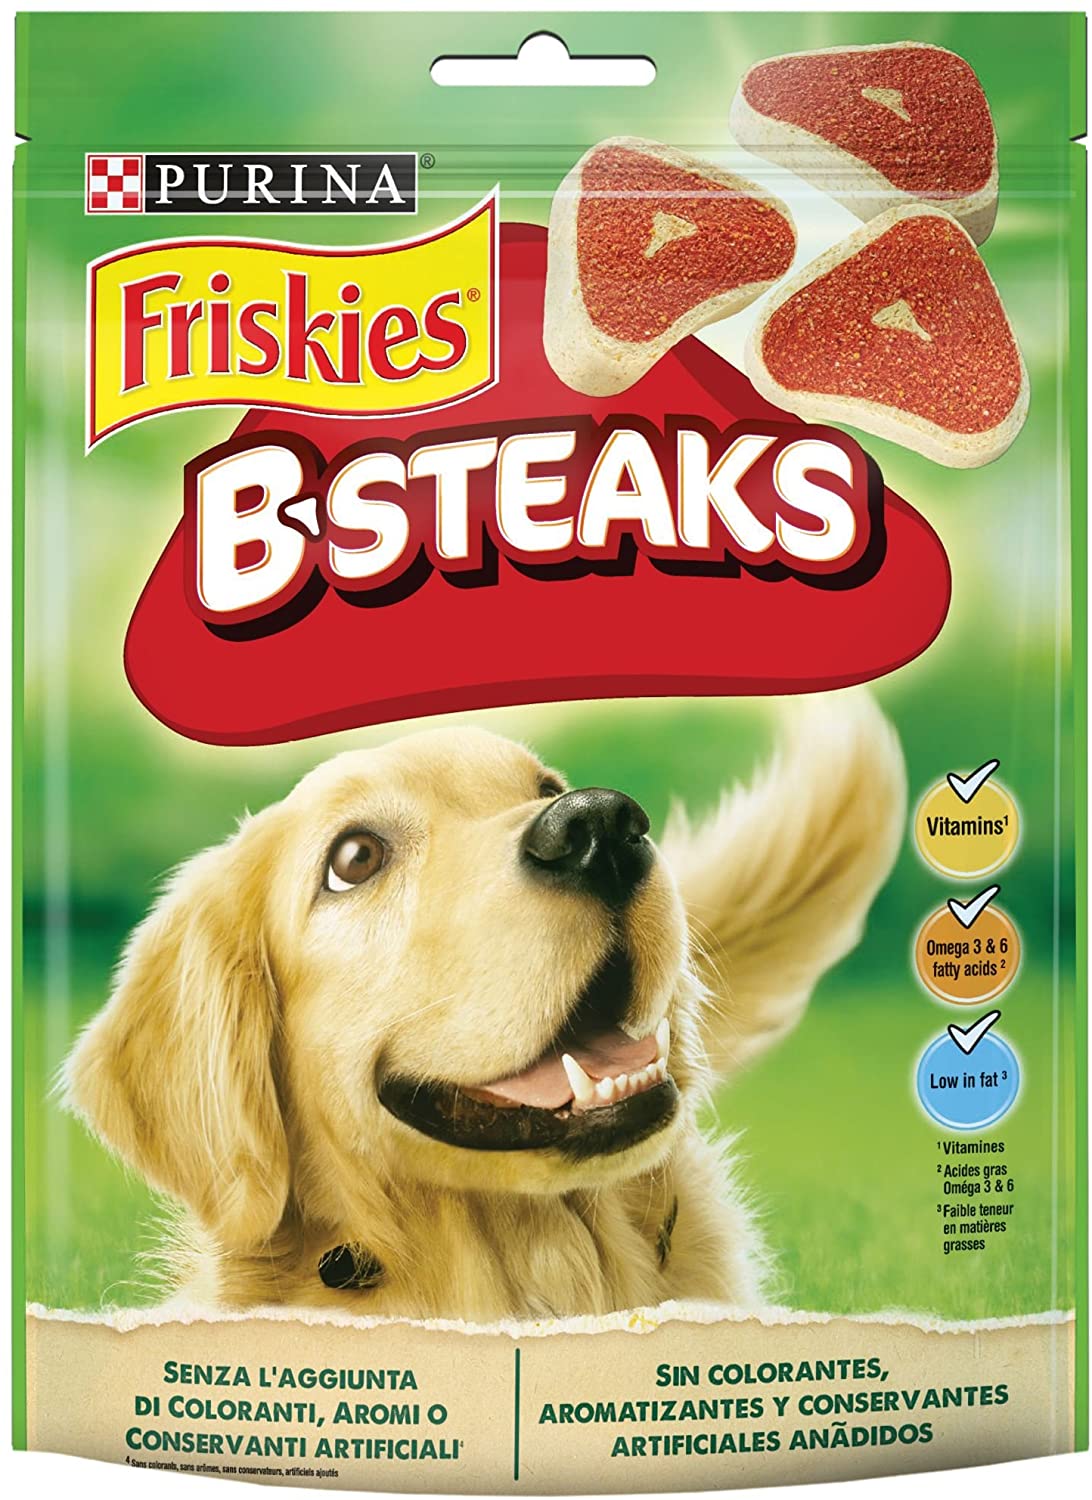  Purina Friskies B-Steaks golosinas y chuches para perros 5 x 150 g 